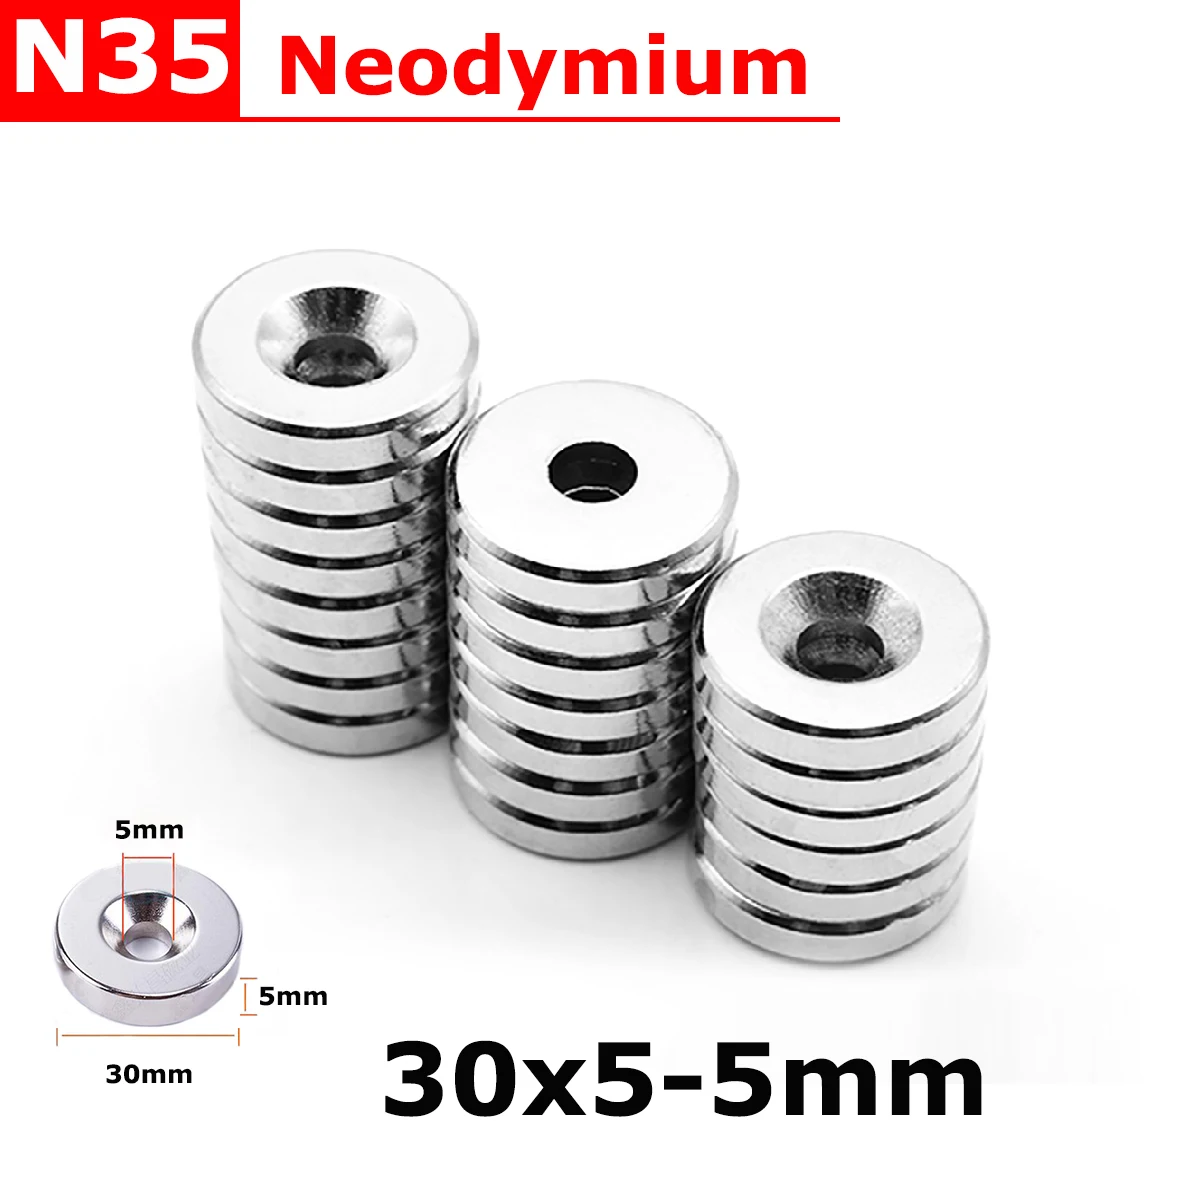 https://ae01.alicdn.com/kf/Sada66c7ad15f4afab600c83209ab3ef0E/30x5-5mm-Neodymium-Magnet-30mm-x-5mm-Hole-5mm-N35-NdFeB-Round-Super-Powerful-Strong-Permanent.jpg